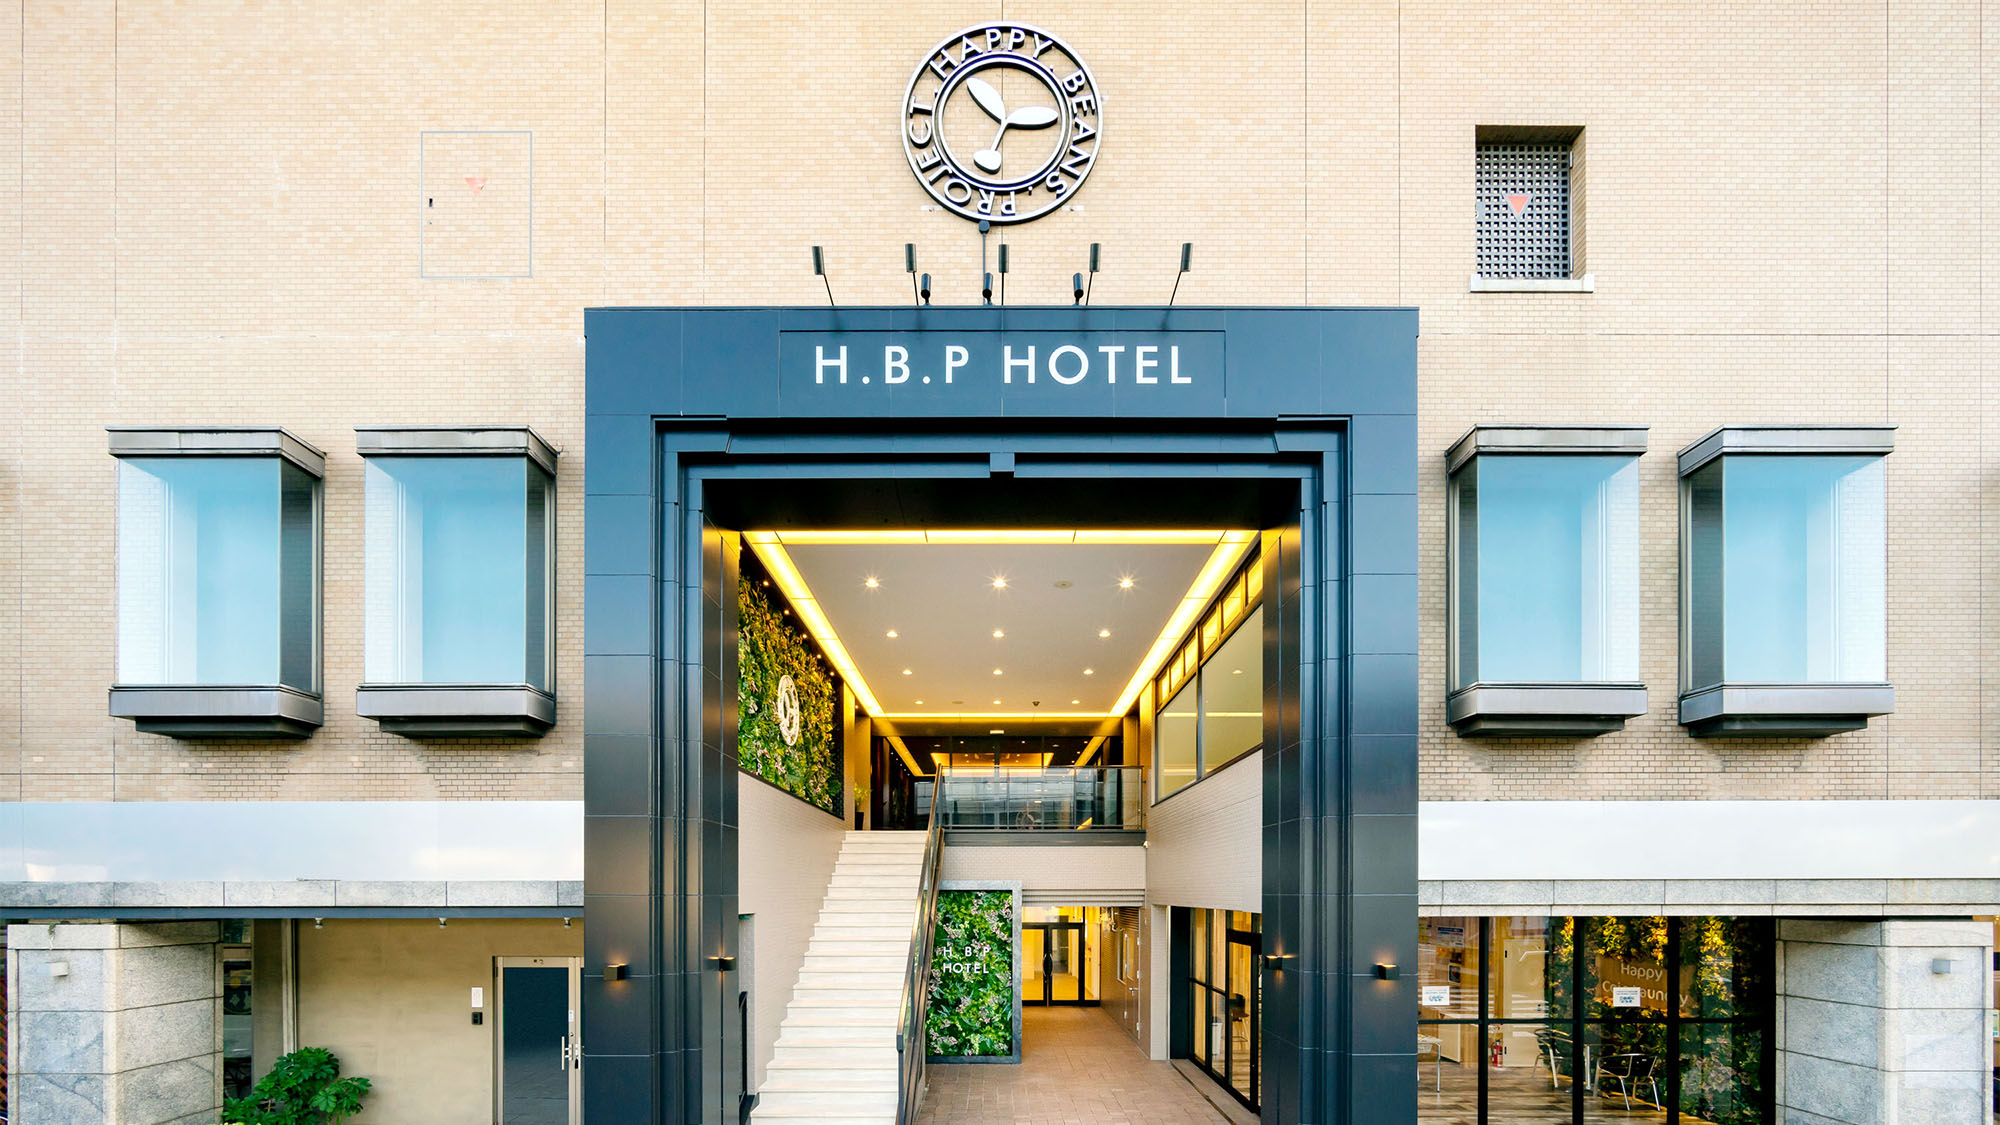 H.B.P HOTEL image